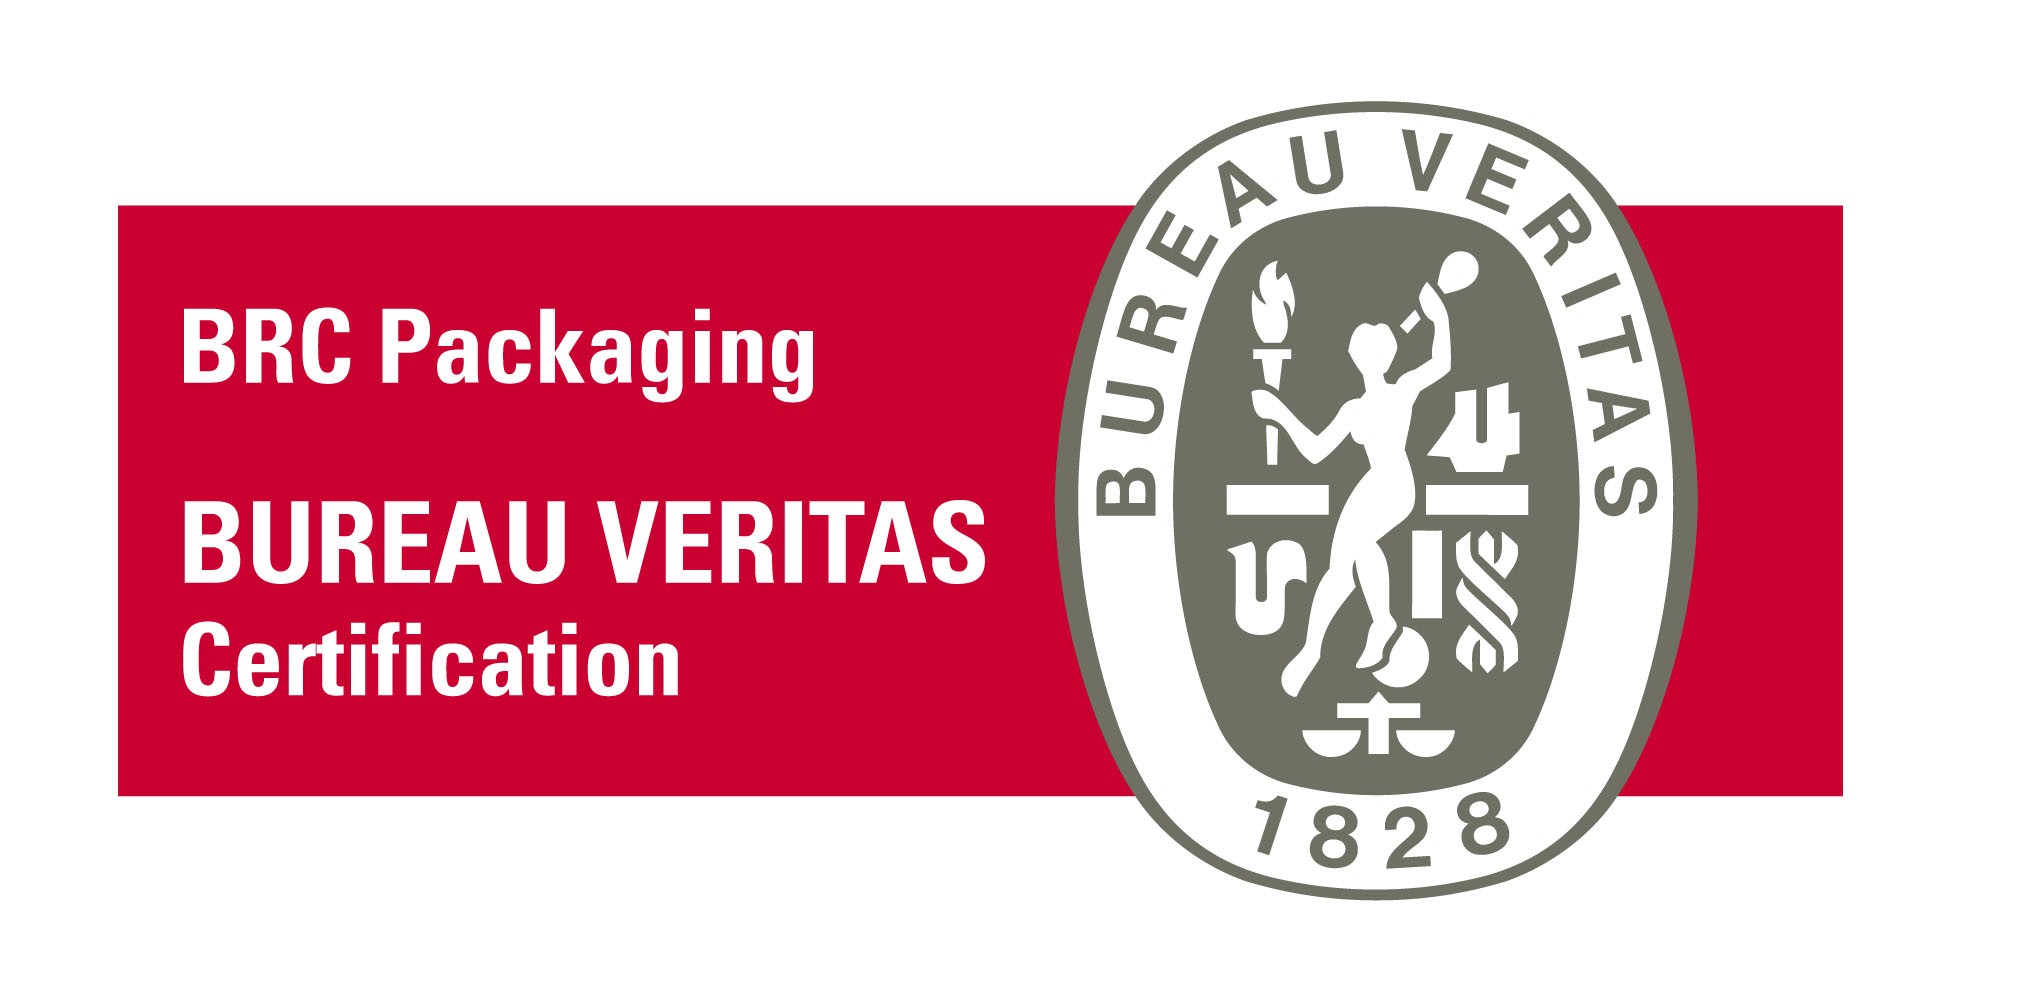 Bureau Veritas BRC Packaging